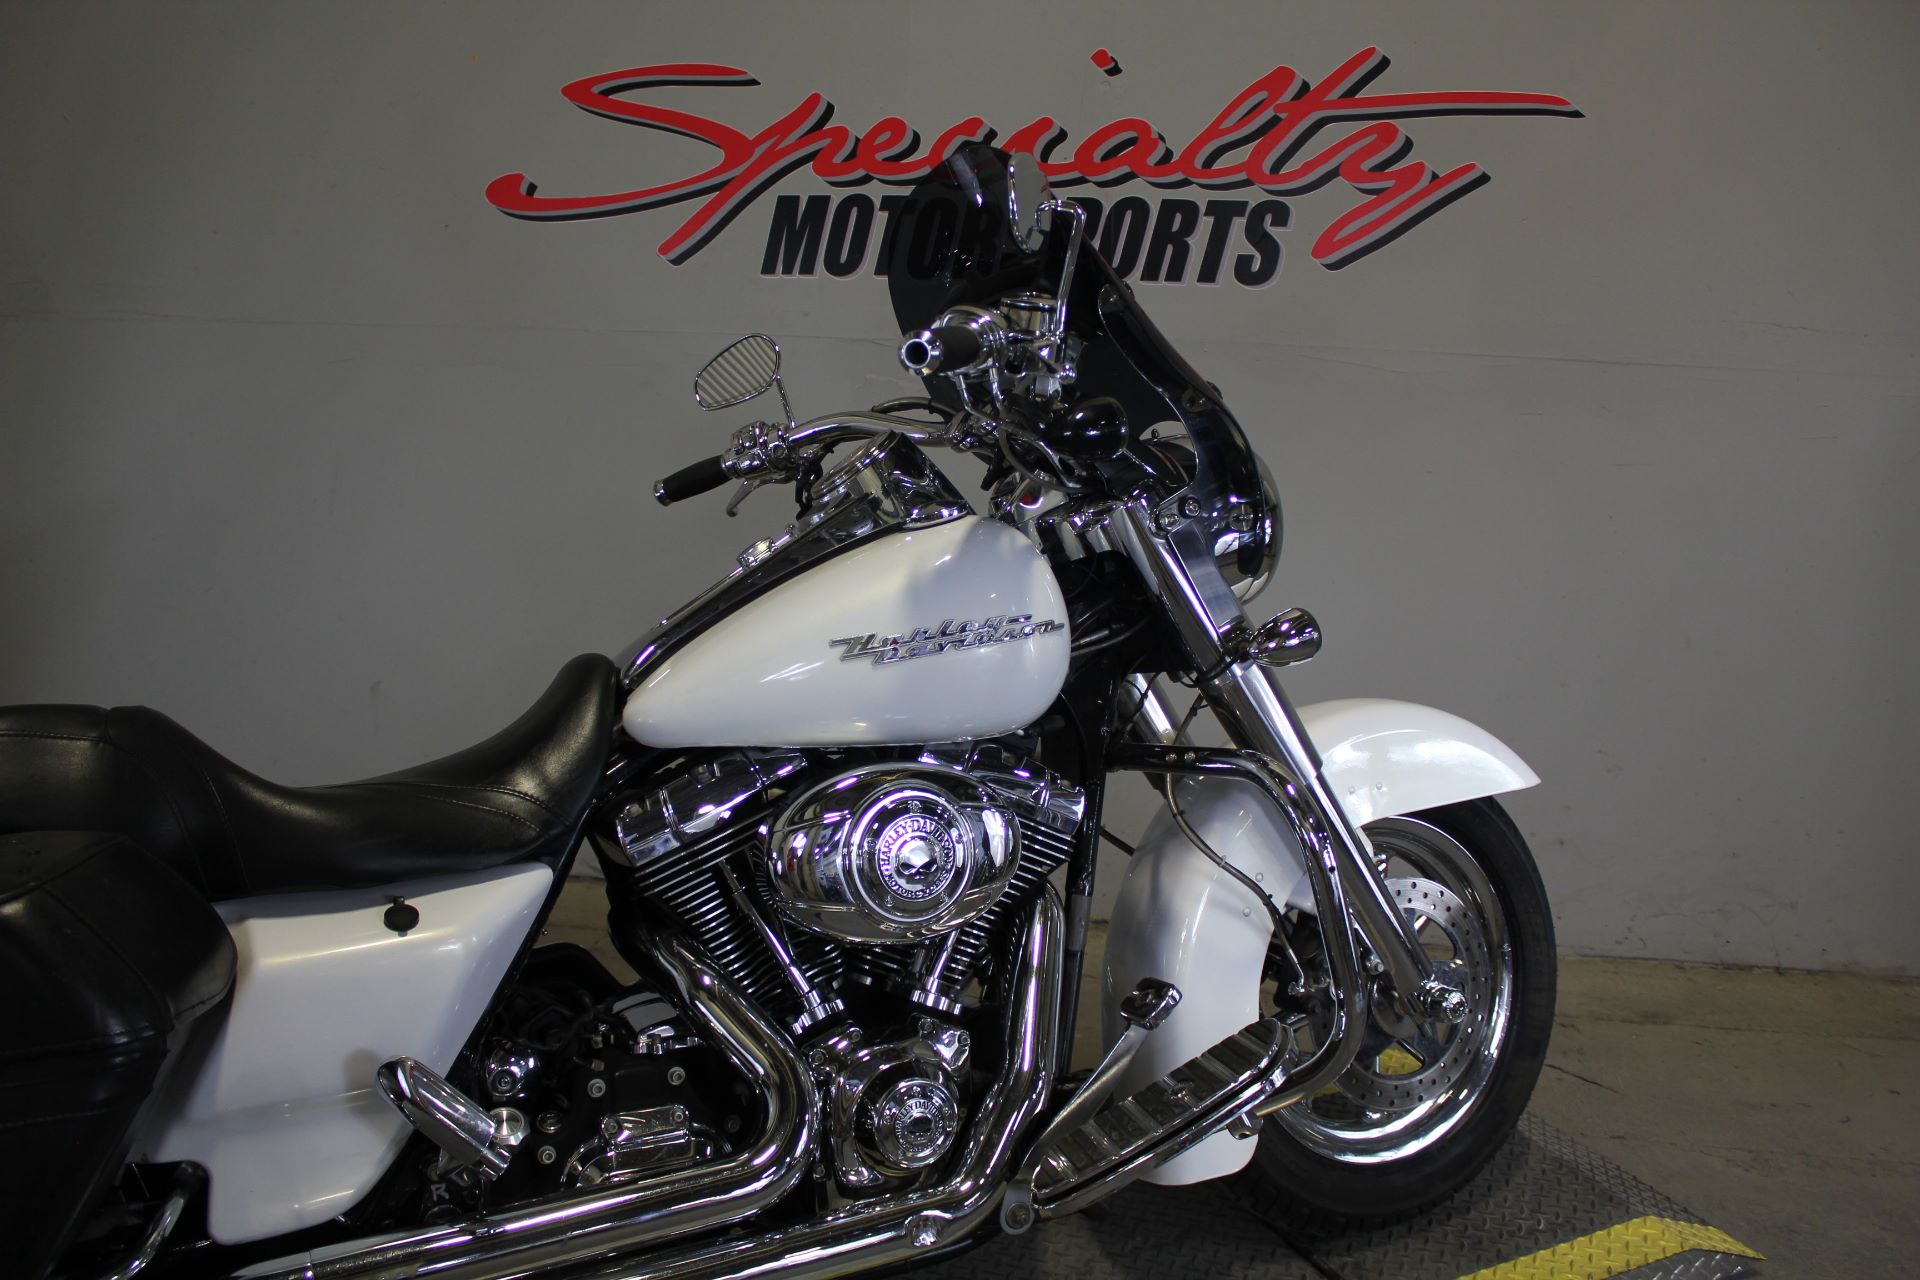 2007 Harley-Davidson Road King® Custom in Sacramento, California - Photo 3